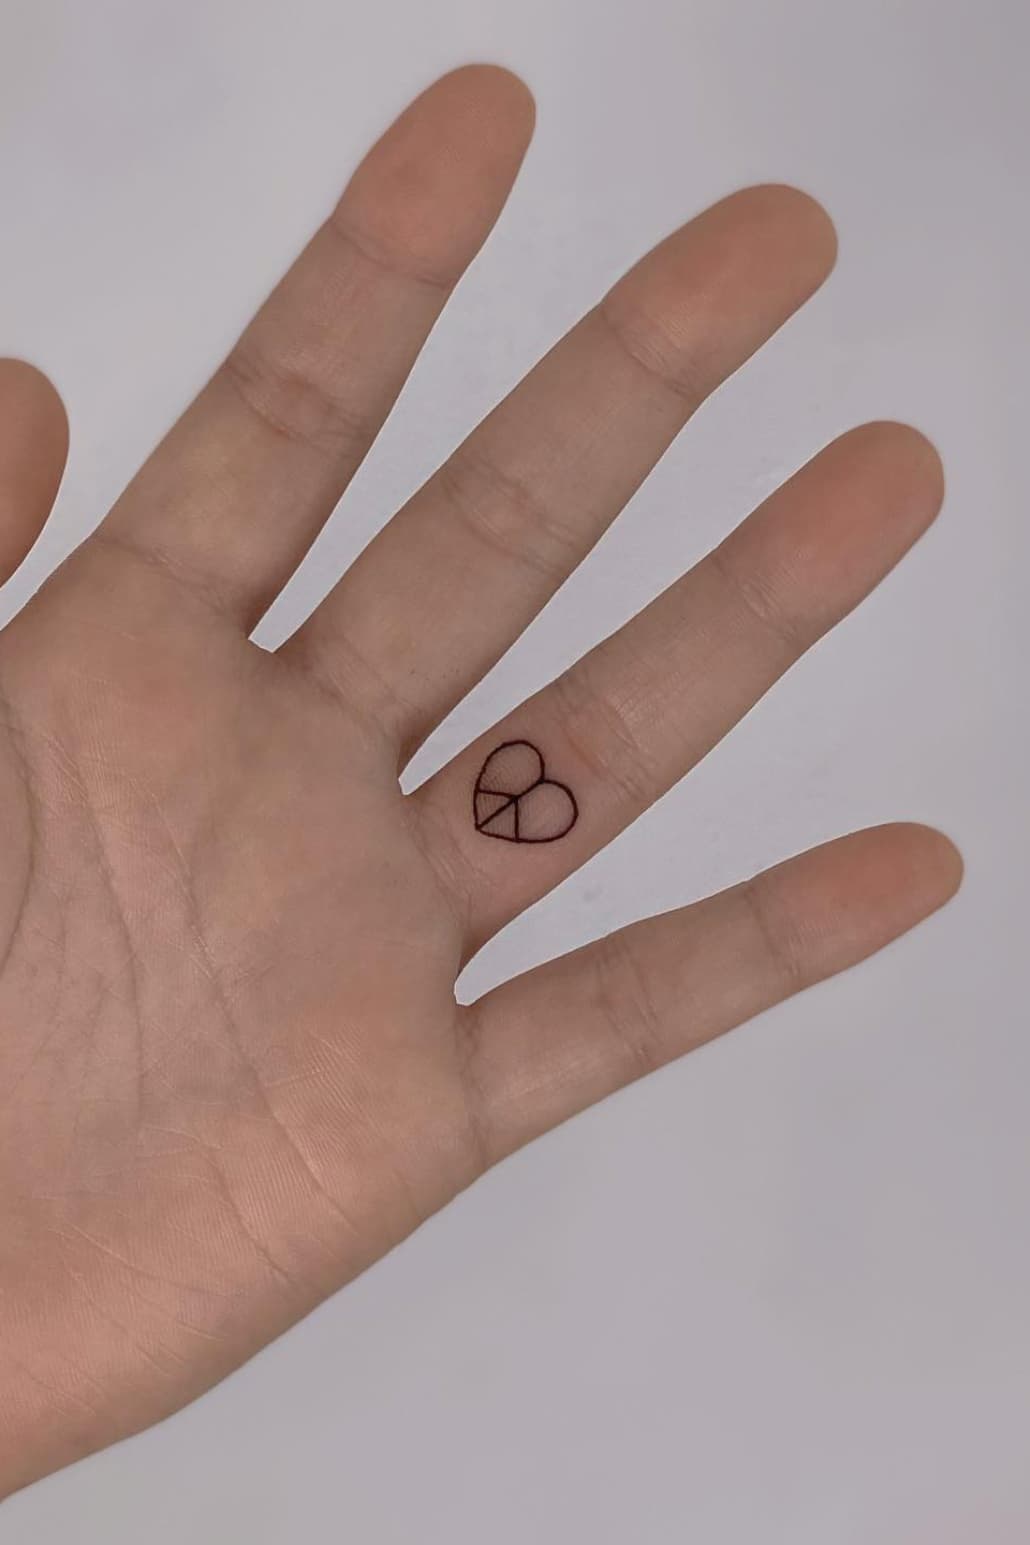 Small Peace Symbol tattoo